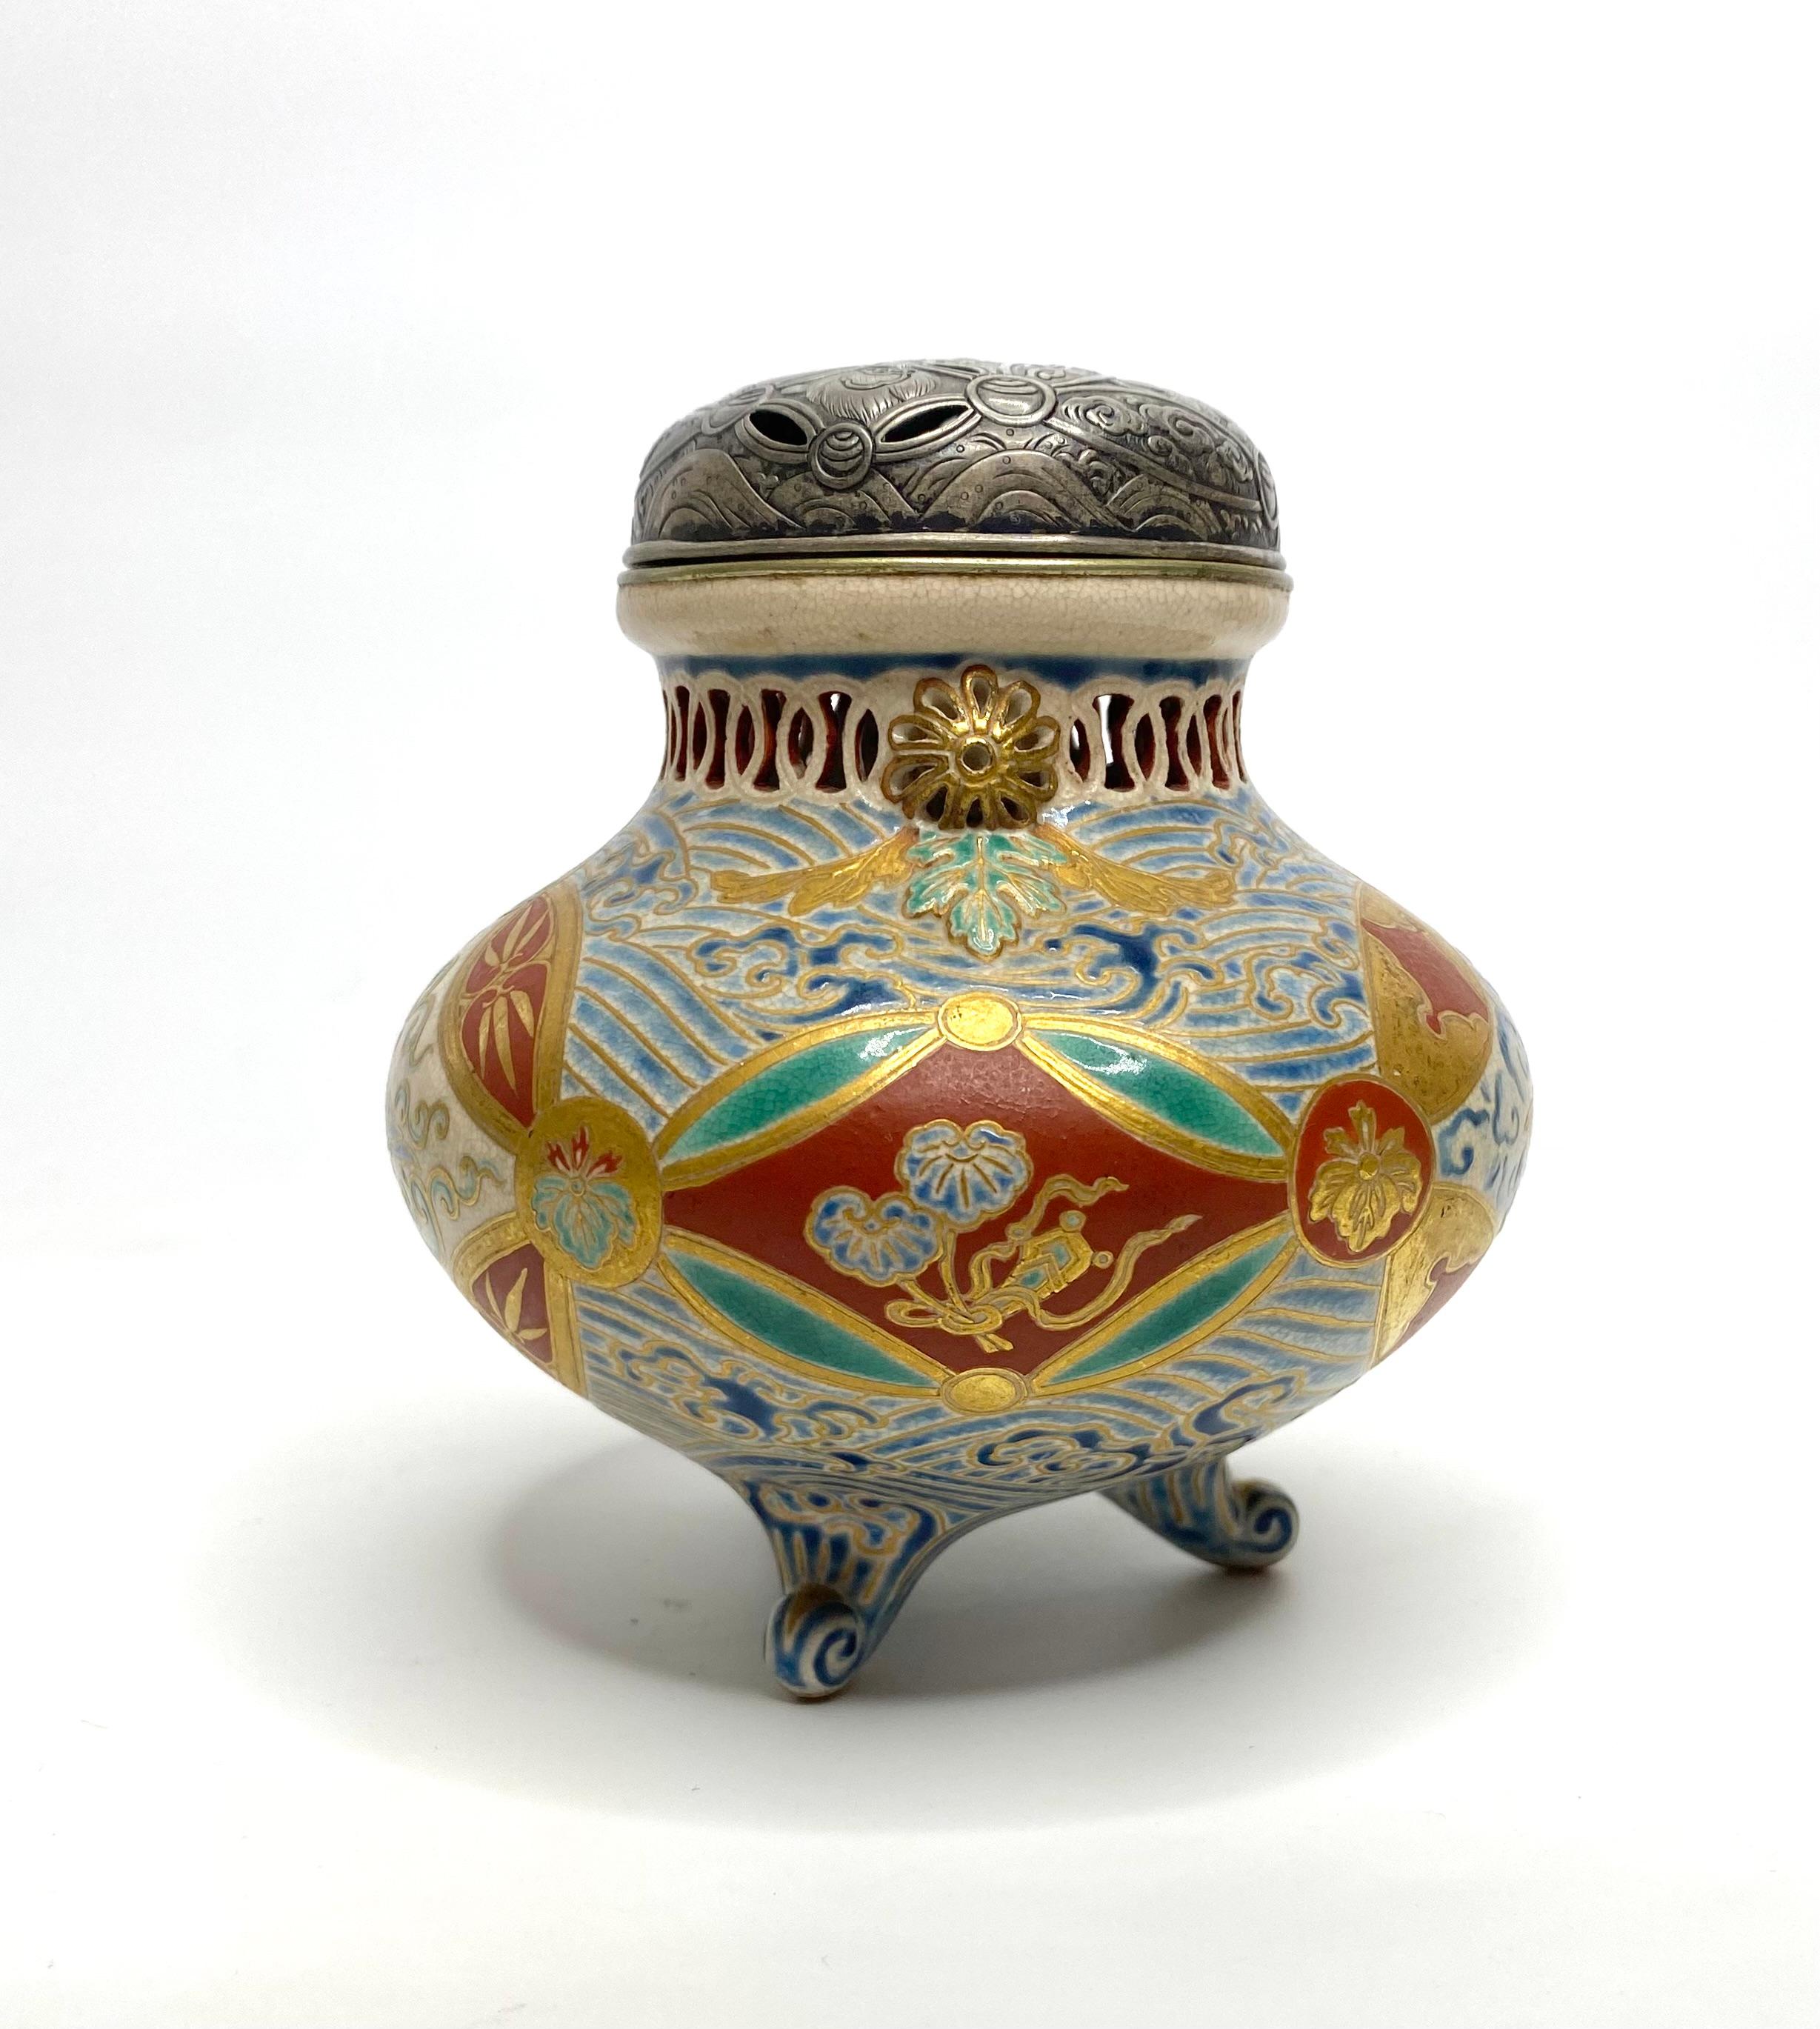 Japanese Imperial Satsuma pottery and silver koro, Japan, Meiji Period.